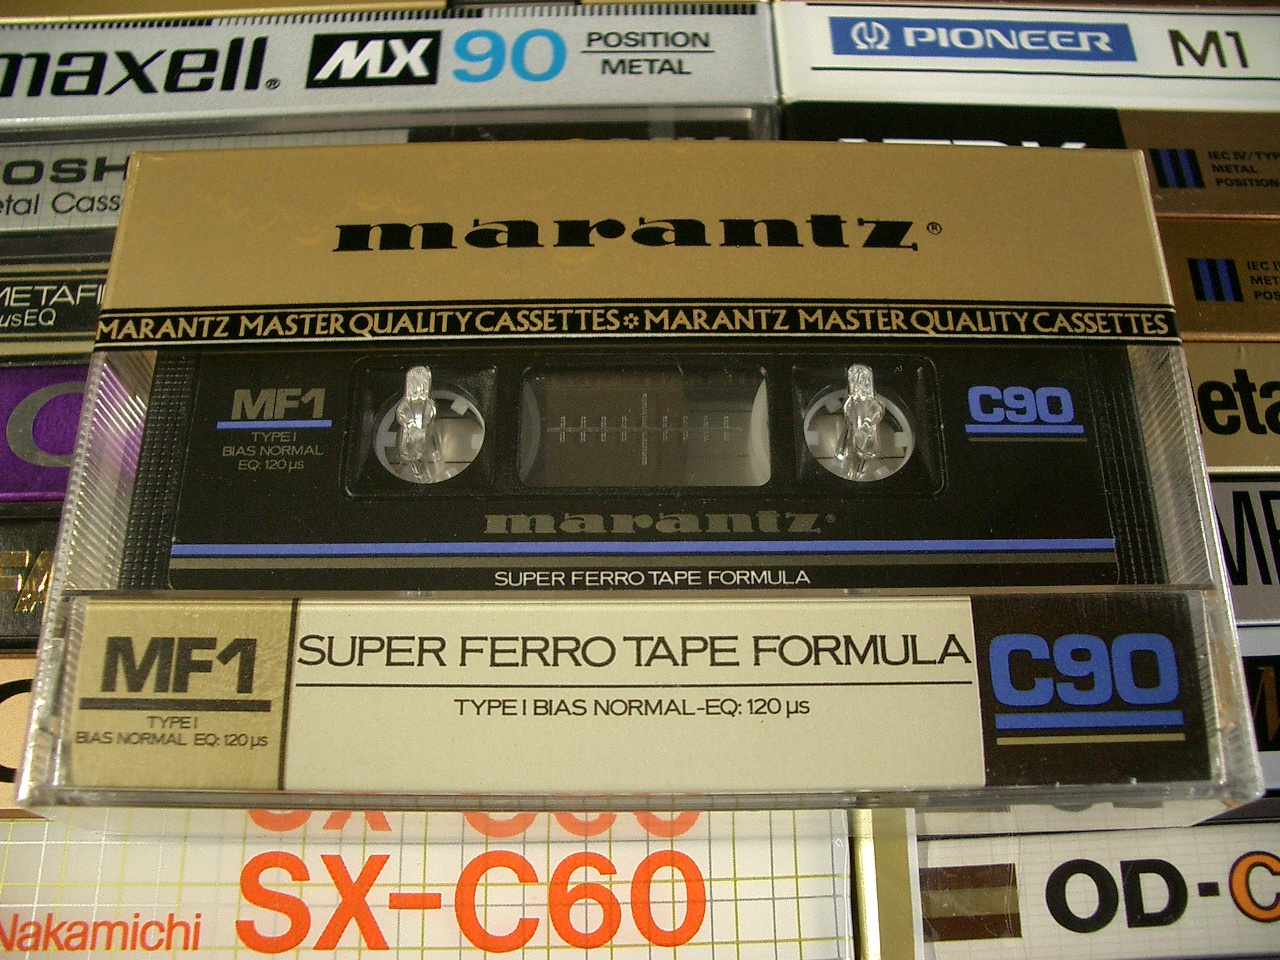 Marantz MF1 C90 by Philips 1983-84.